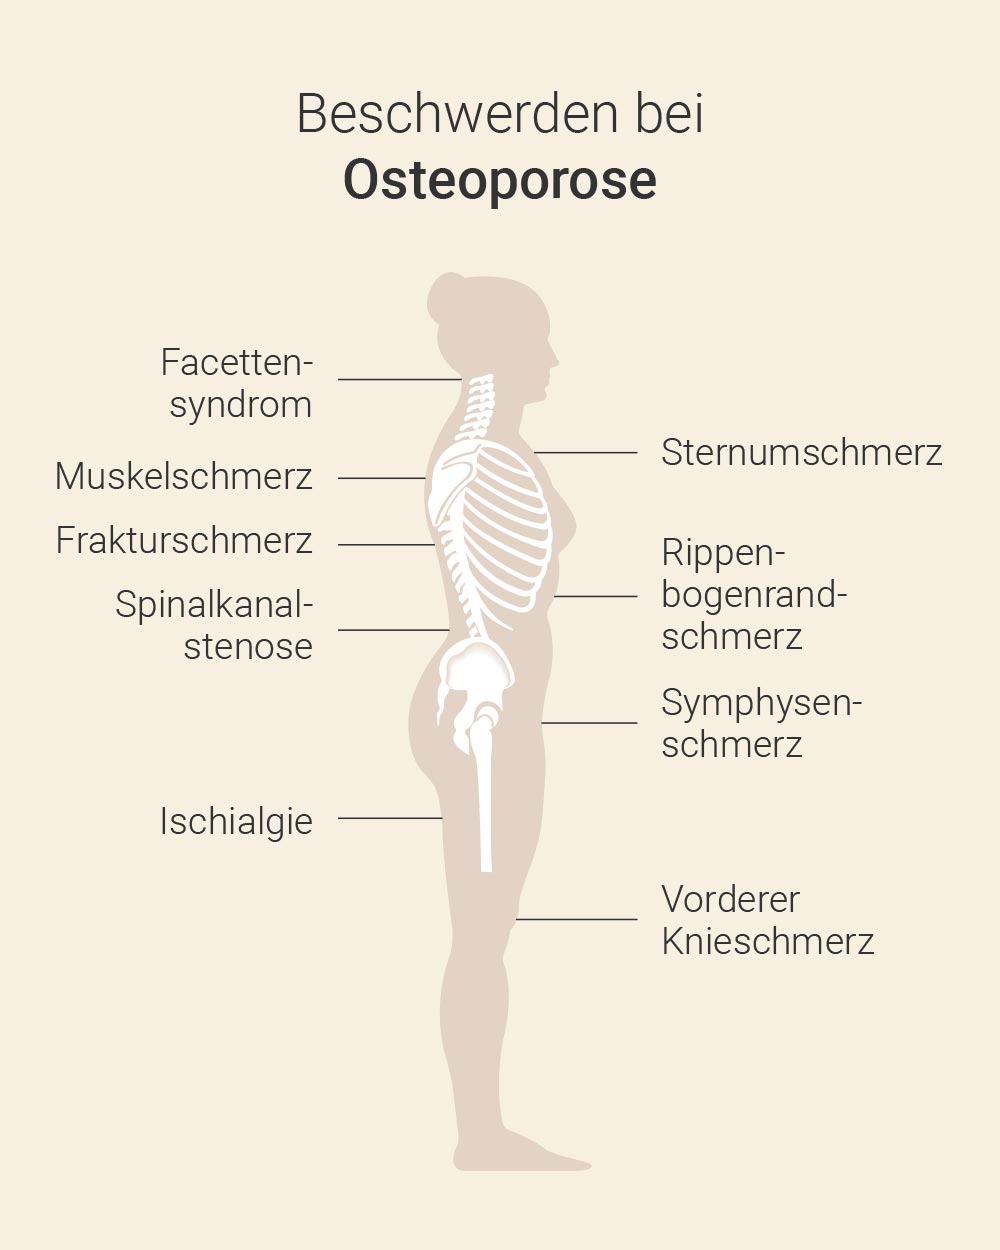 Osteoporose Symptome